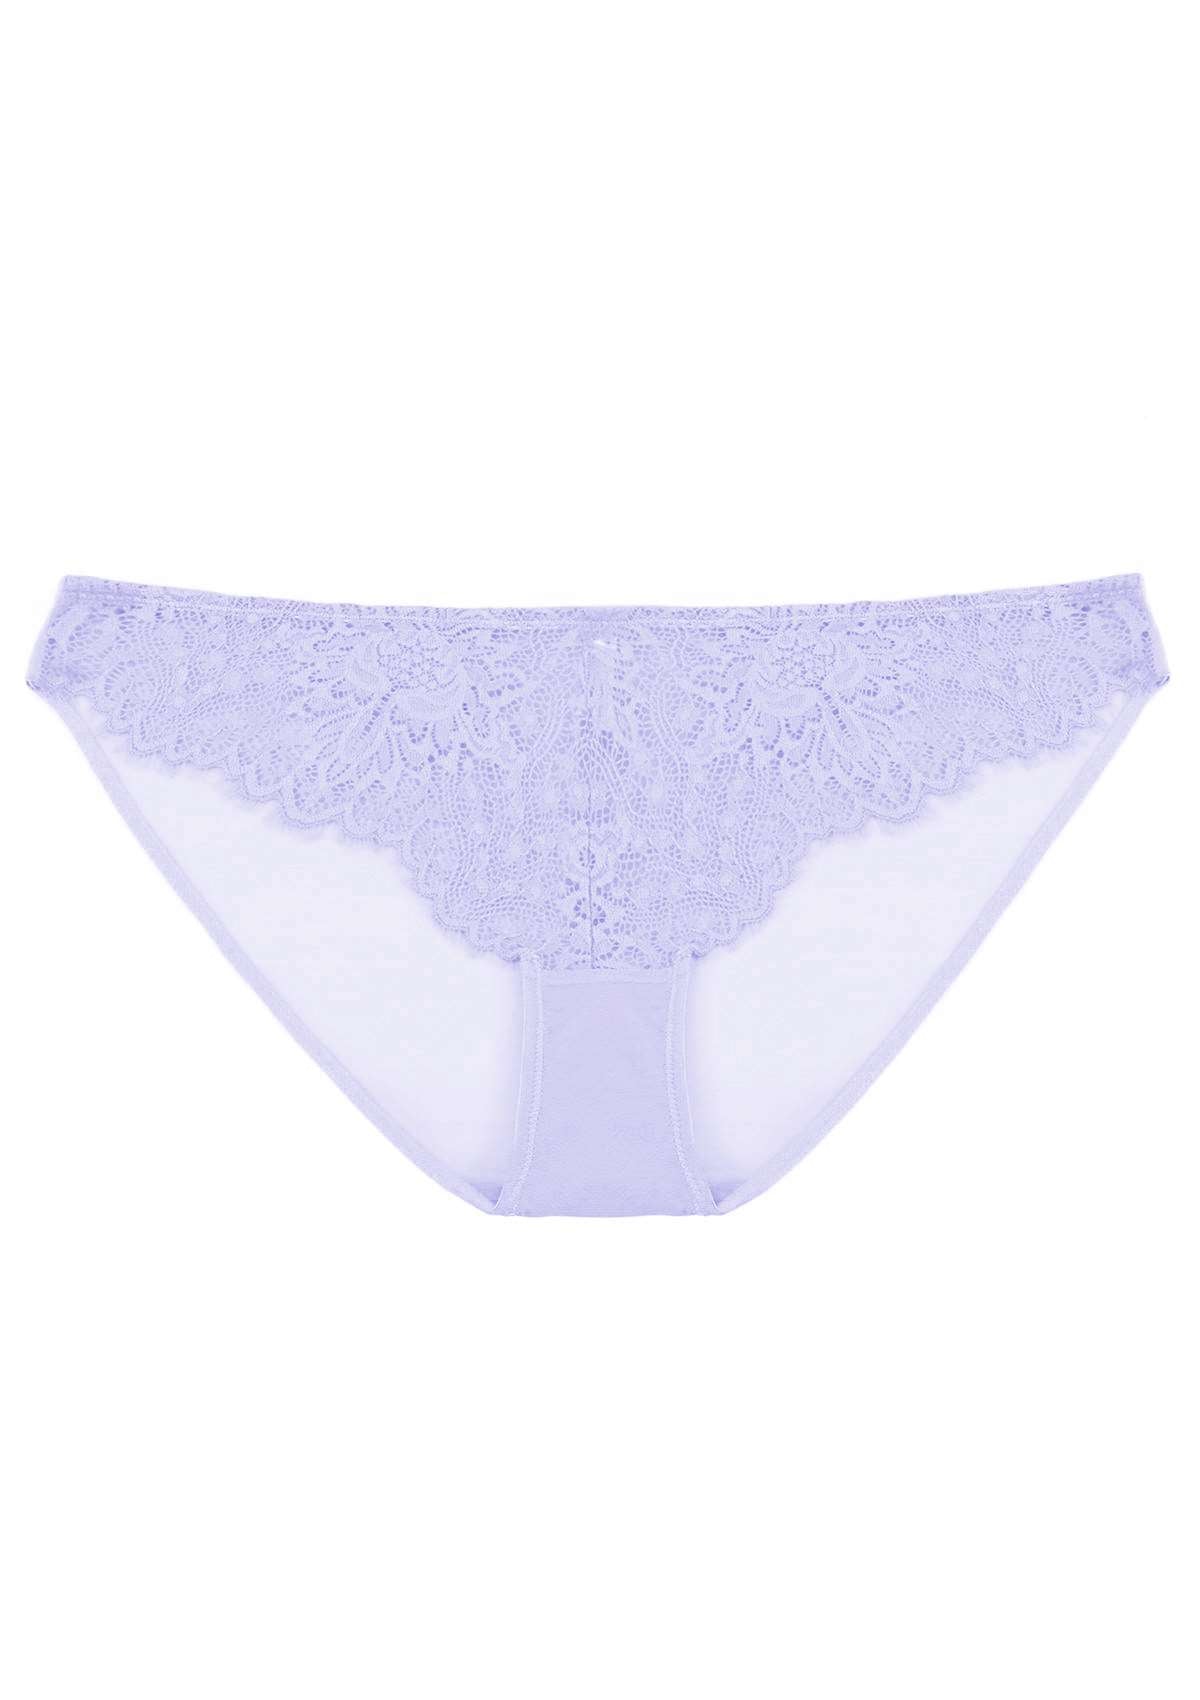 HSIA Sunflower Exquisite Purple Lace Bikini Underwear - XL / Purple